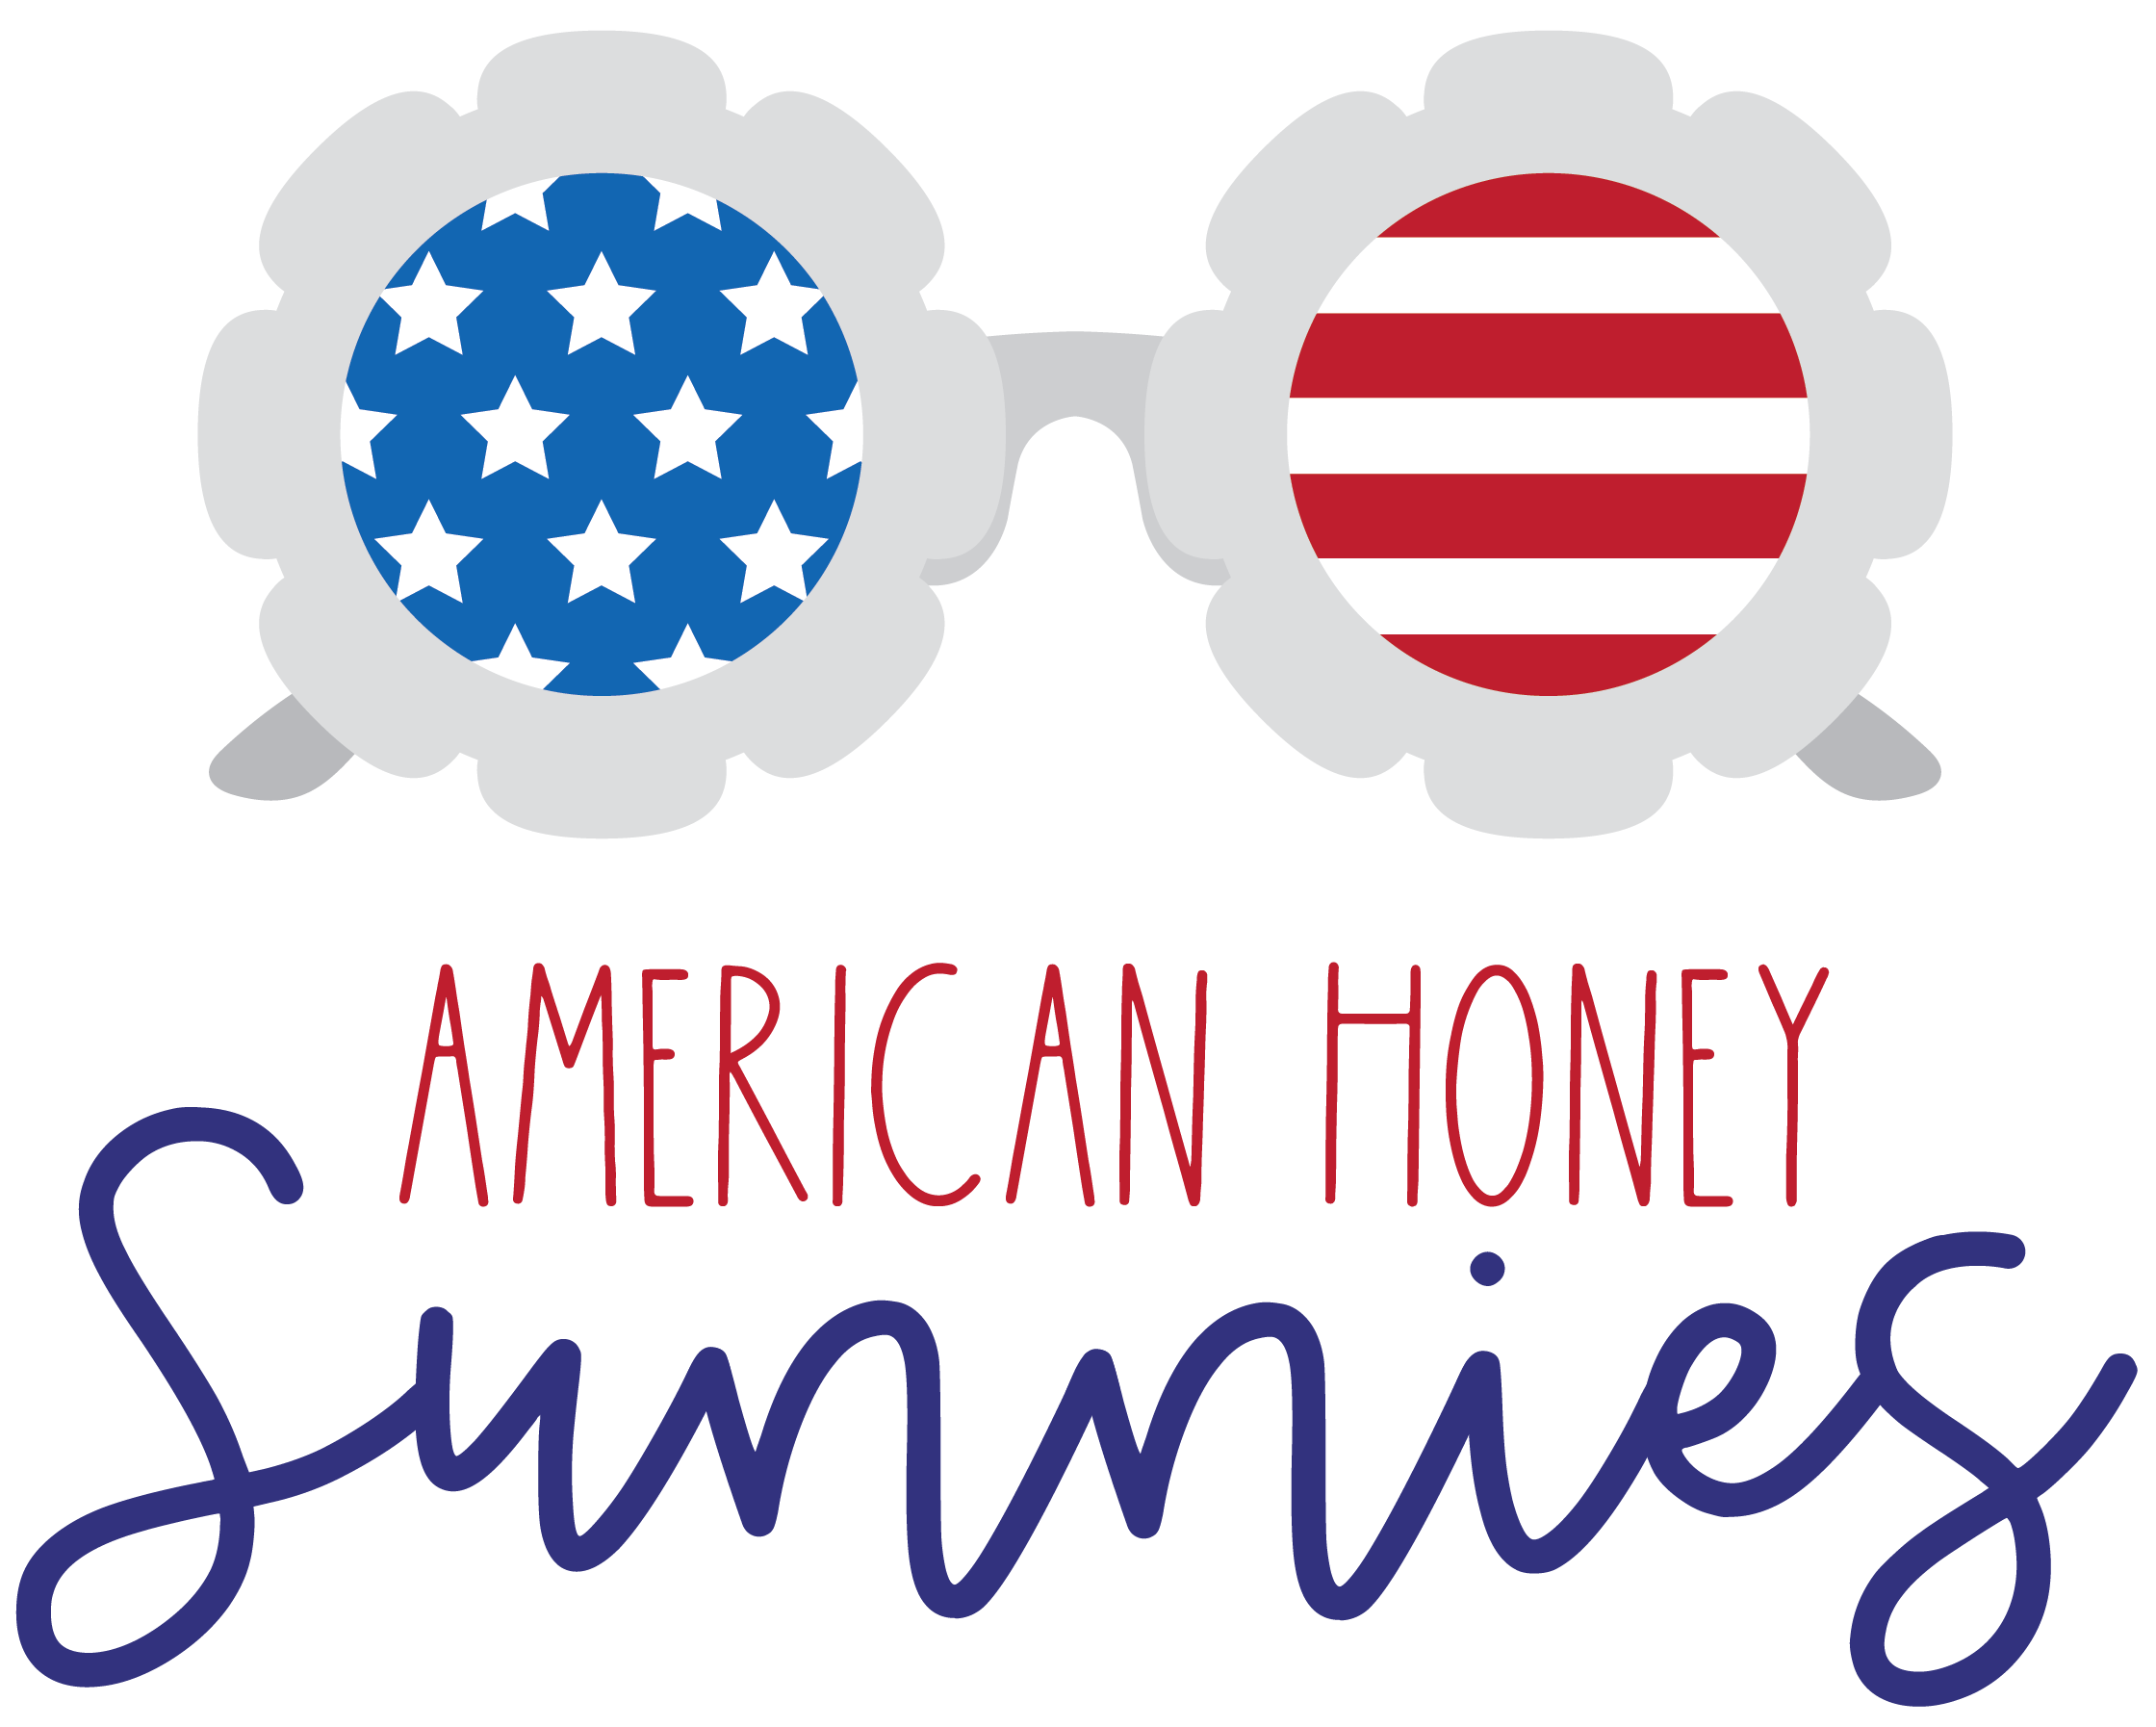 American Honey Sunnies, LLC